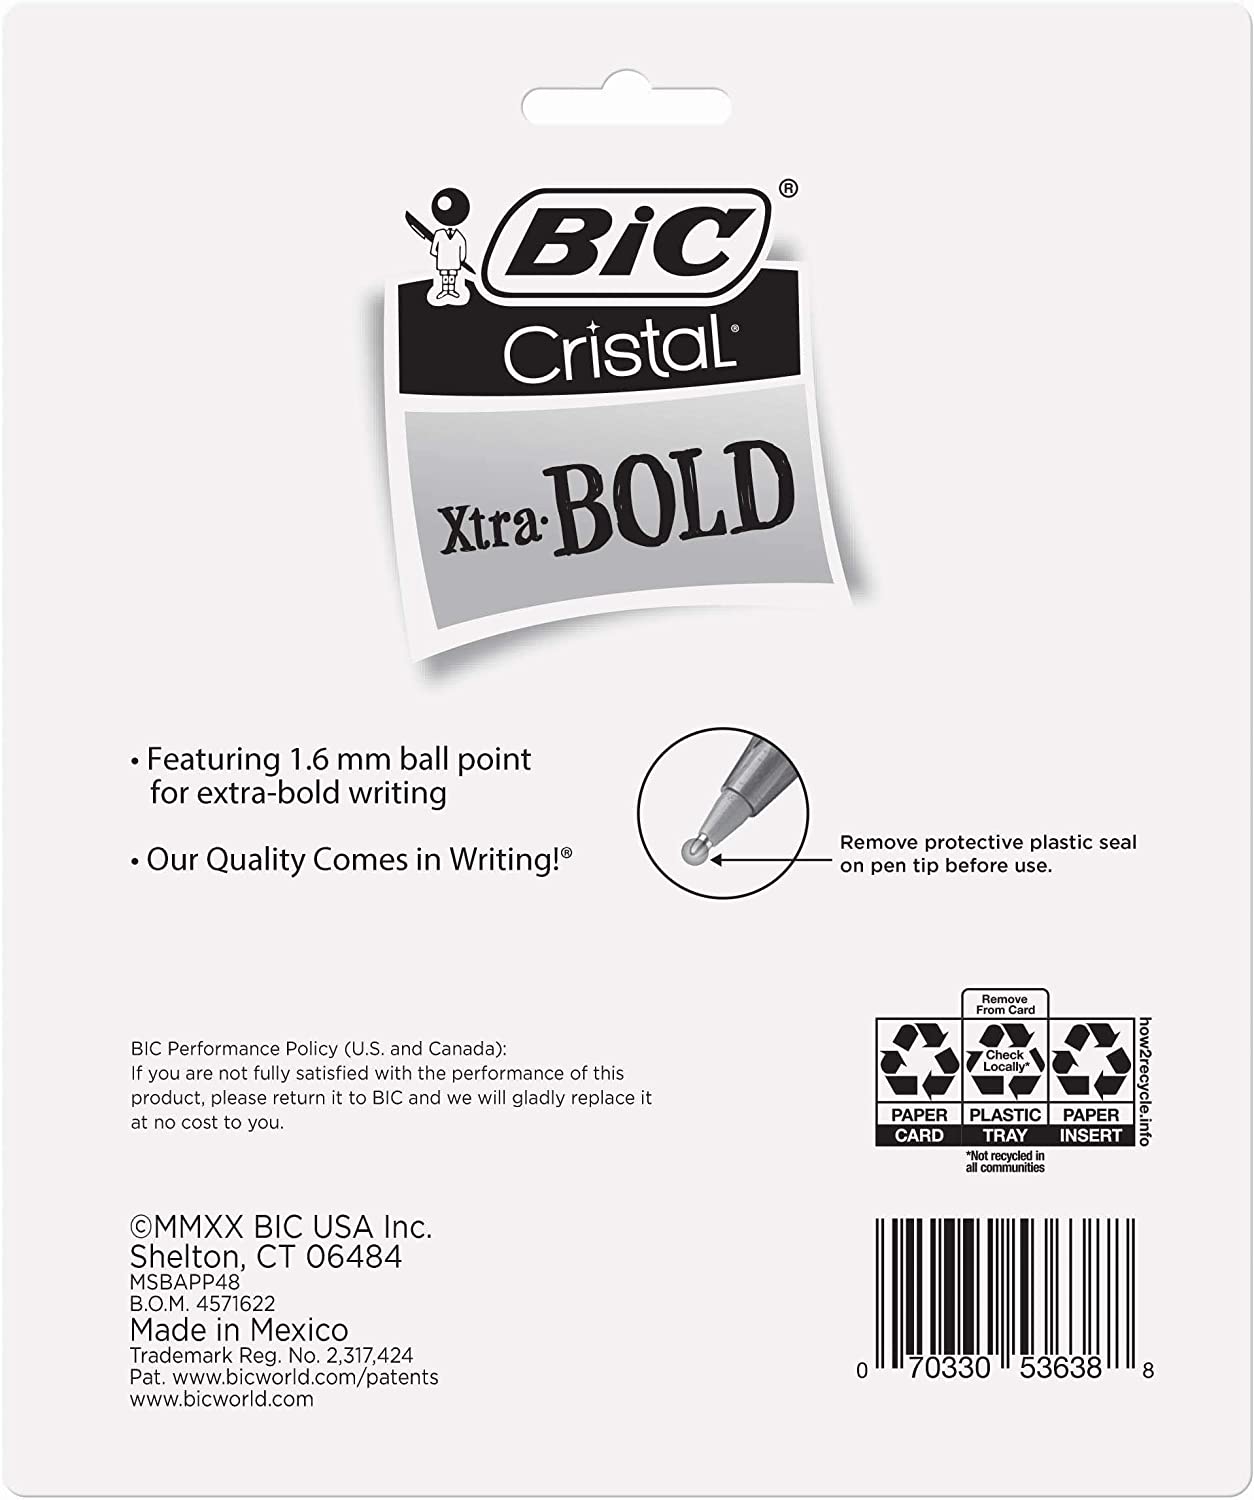 BIC Cristal Xtra Bold Fashion Ballpoint Pens back